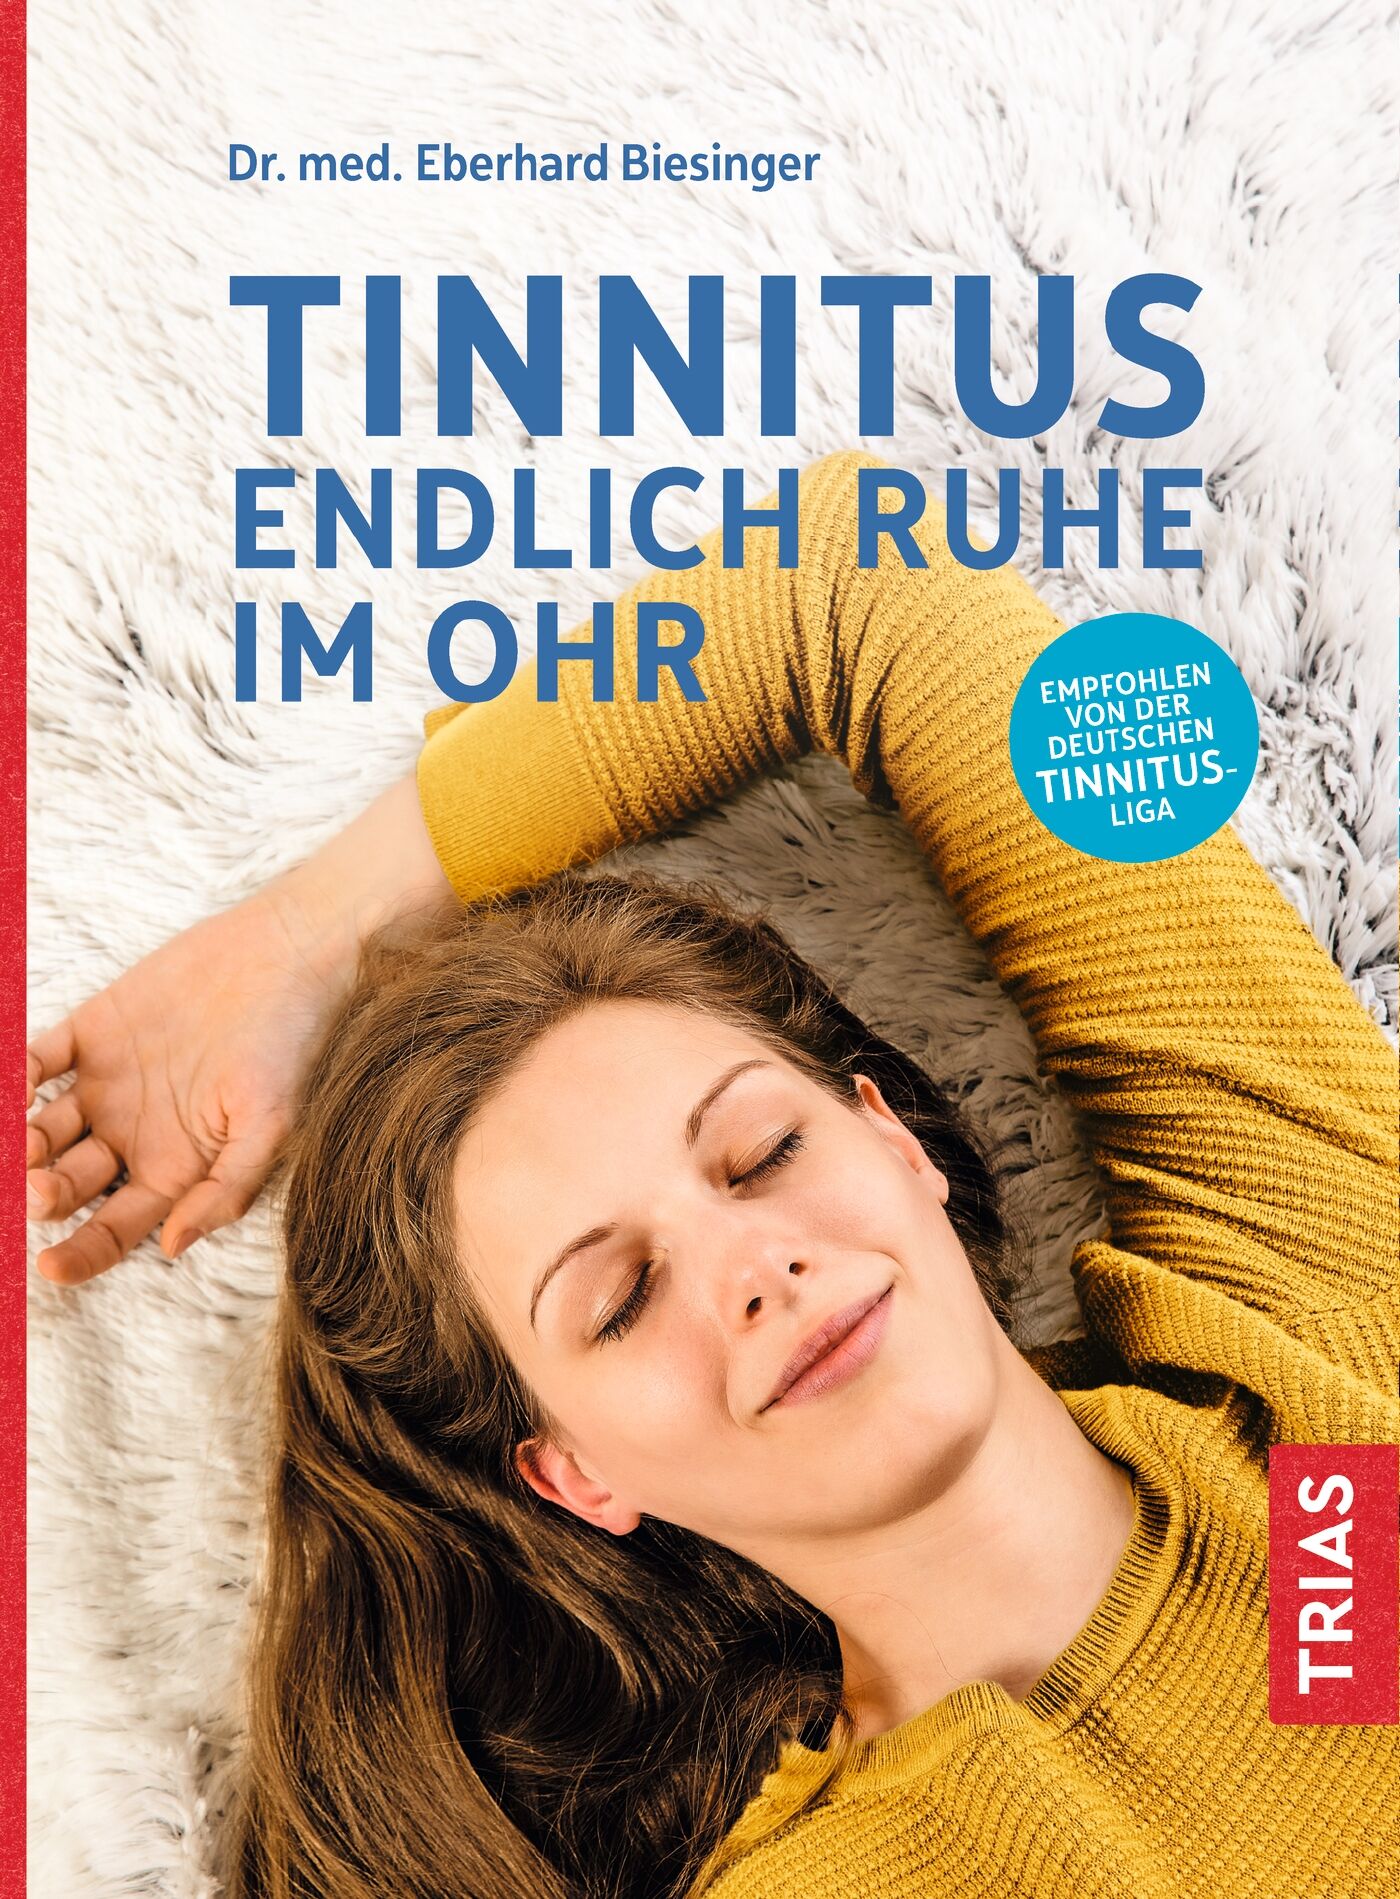 Tinnitus - Endlich Ruhe im Ohr, 9783432109381